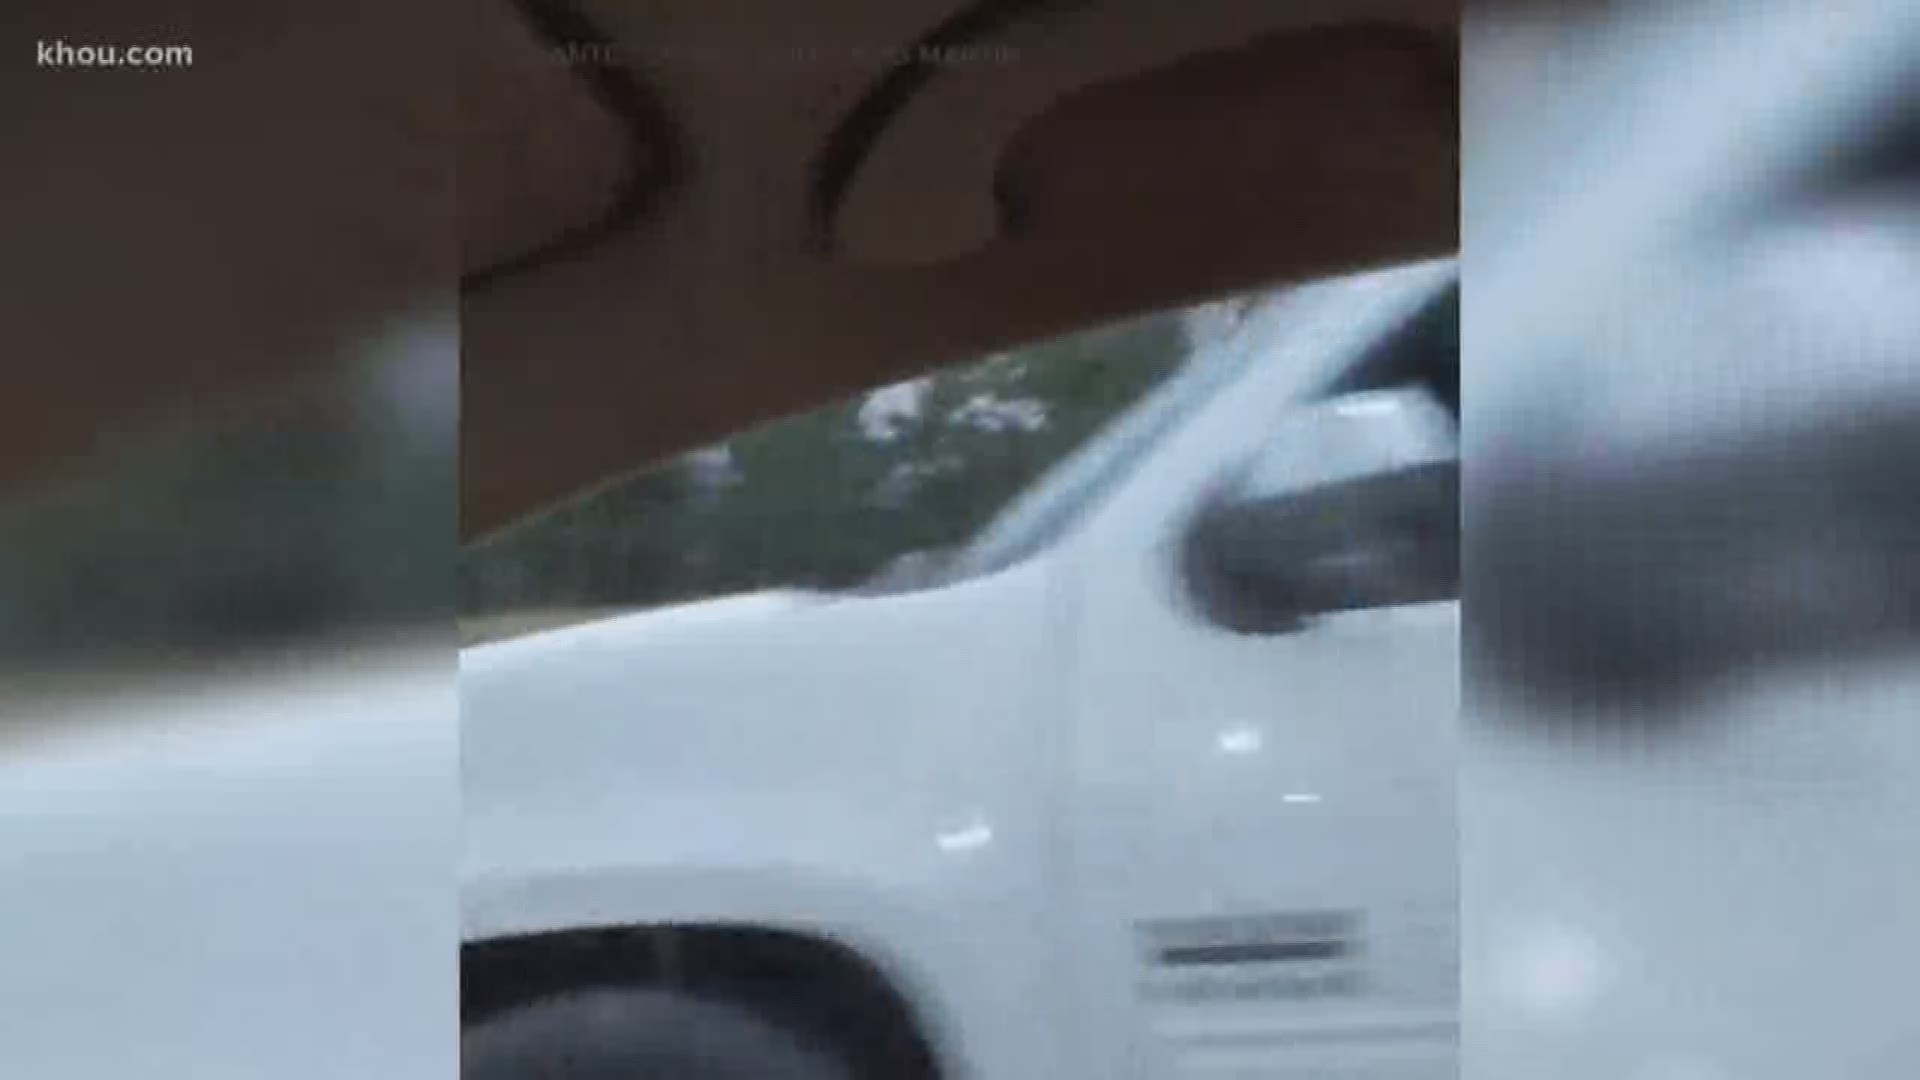 A very dangerous road rage encounter was caught on video Tuesday on U.S. 59 near Splendora.